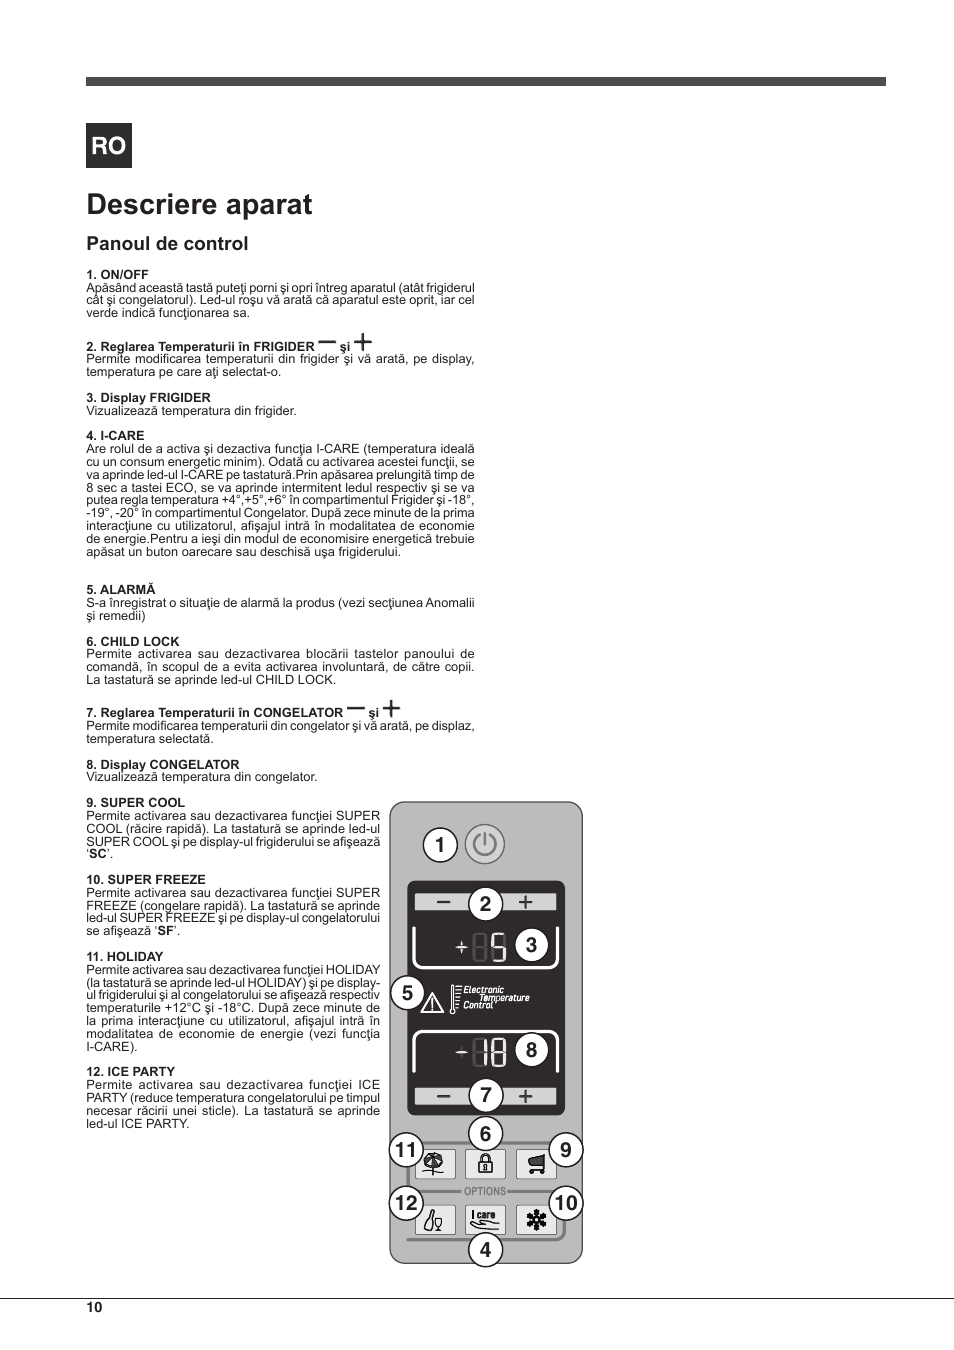 Descriere aparat, Panoul de control | Hotpoint Ariston Combinato EBD 18323  F User Manual | Page 10 / 52